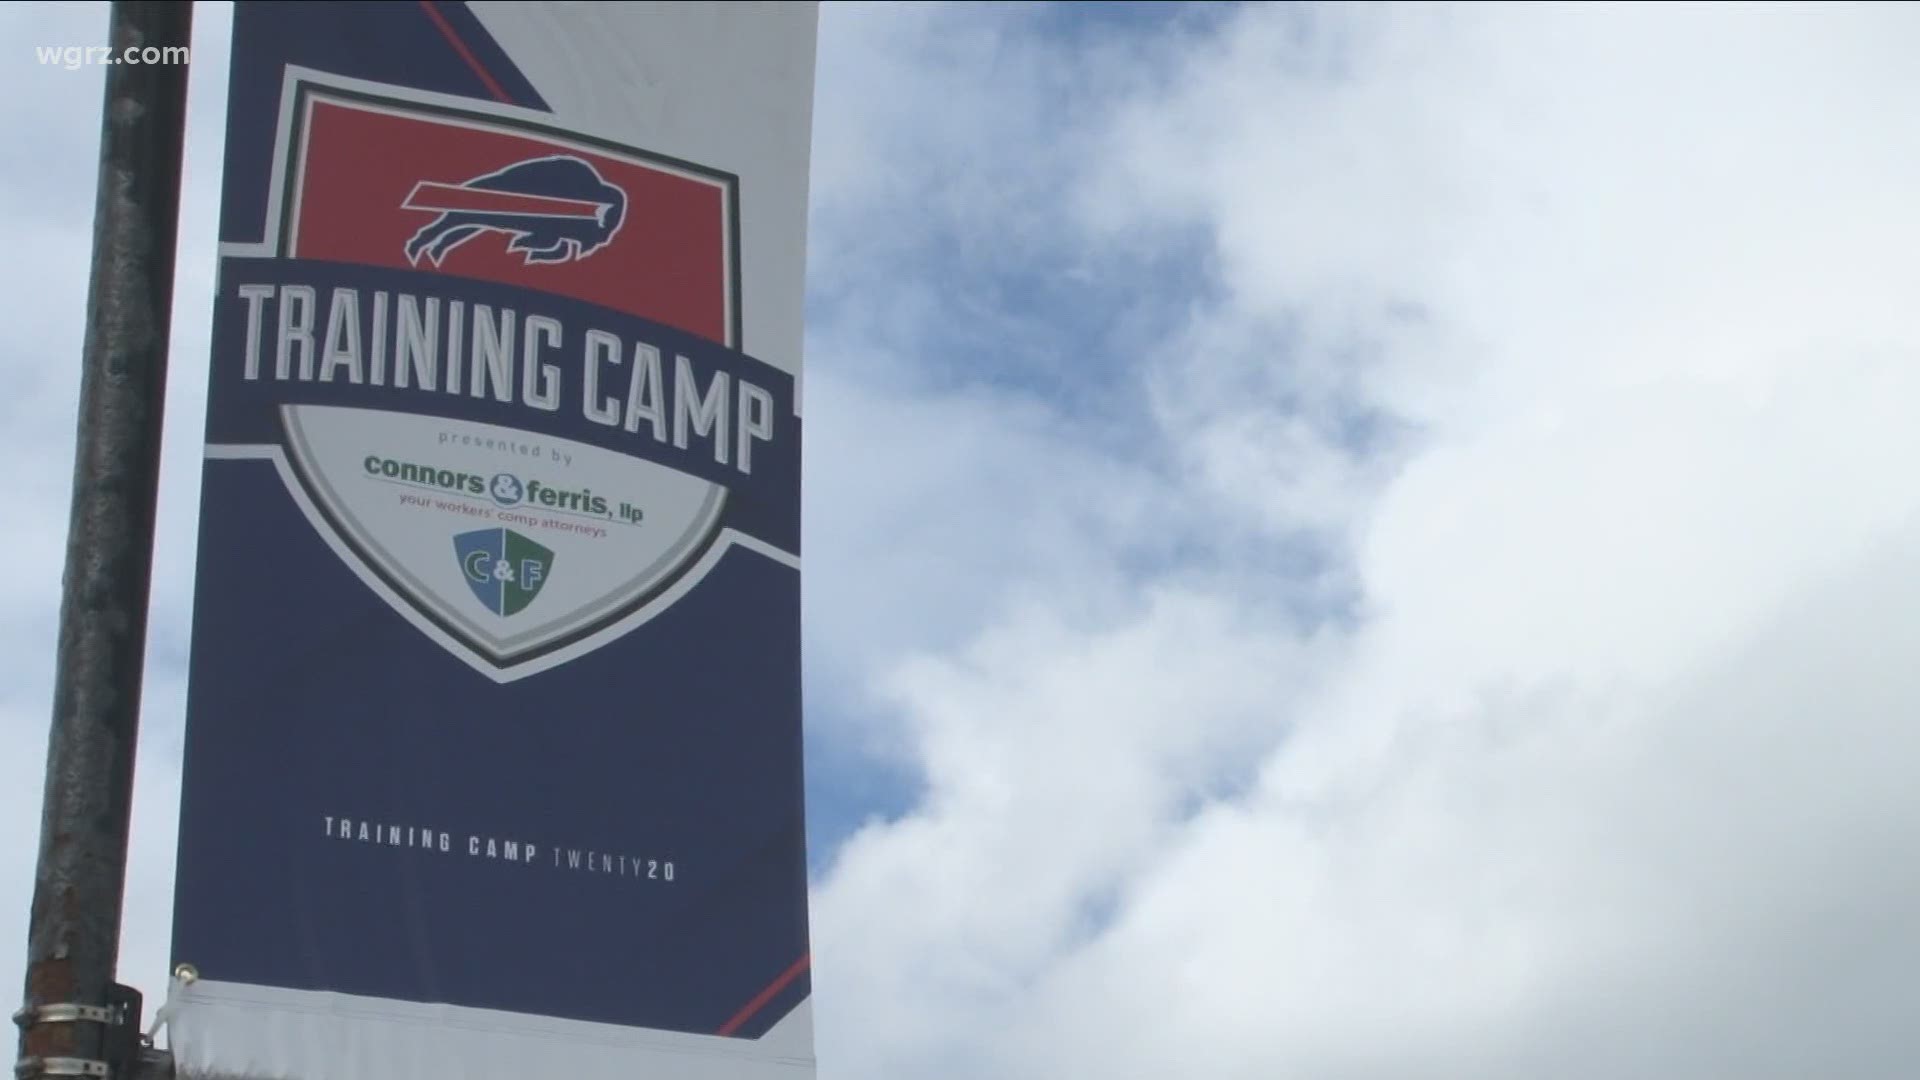 Buffalo Bills training camp is underway at Bills Stadium, in Orchard Park.